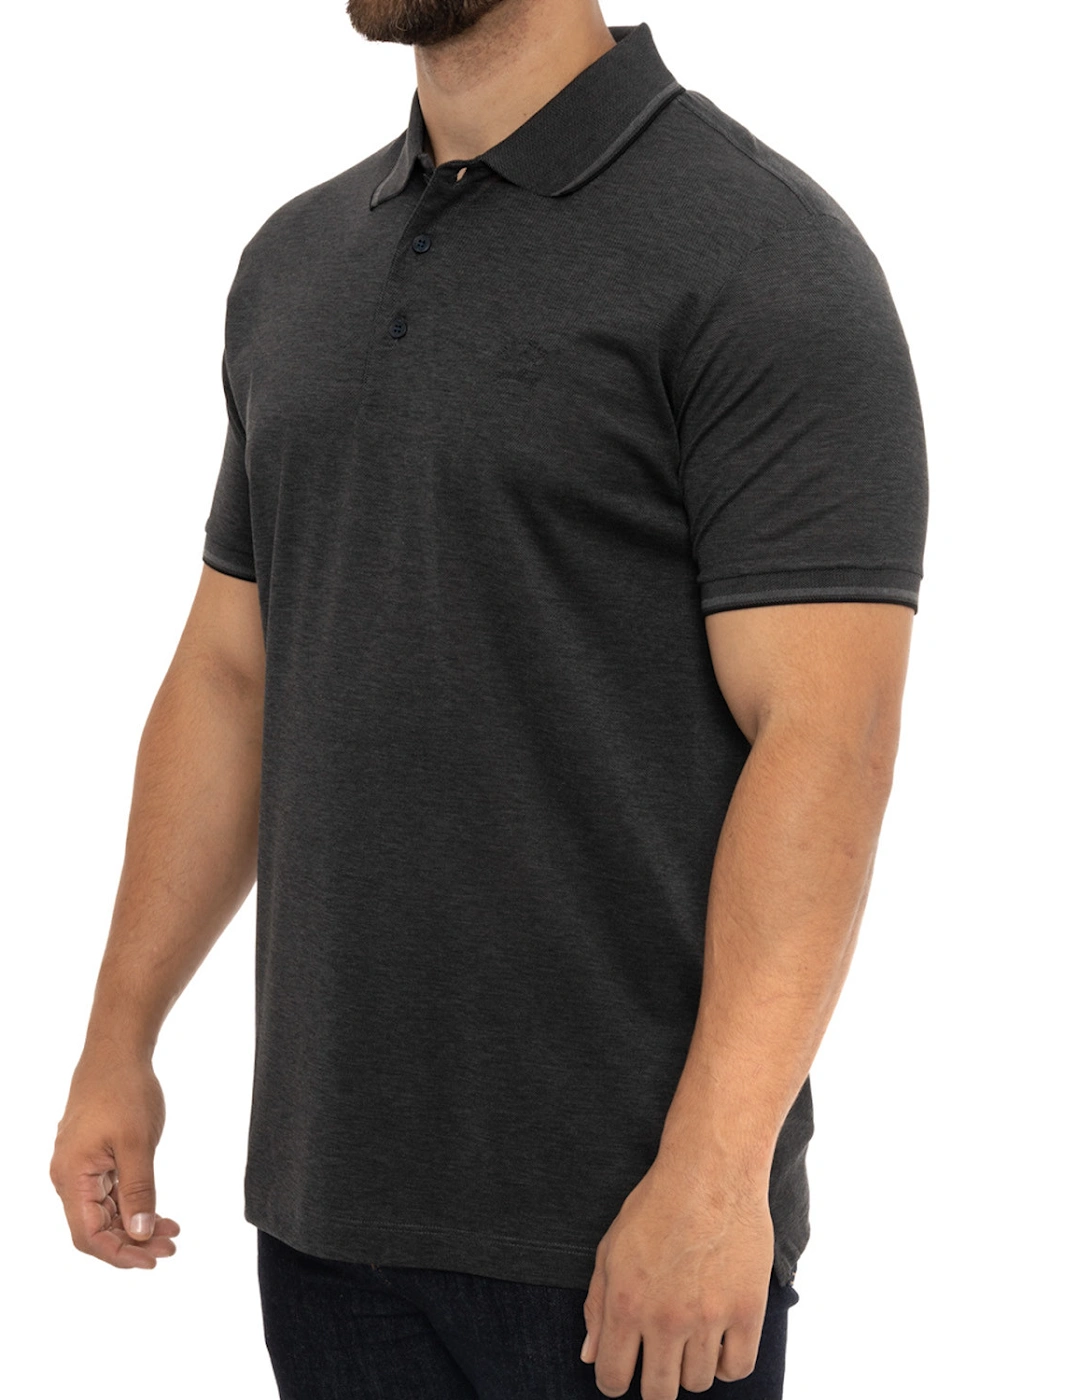 Mens 3-1 Kompact Tech Polo Shirt (Black)